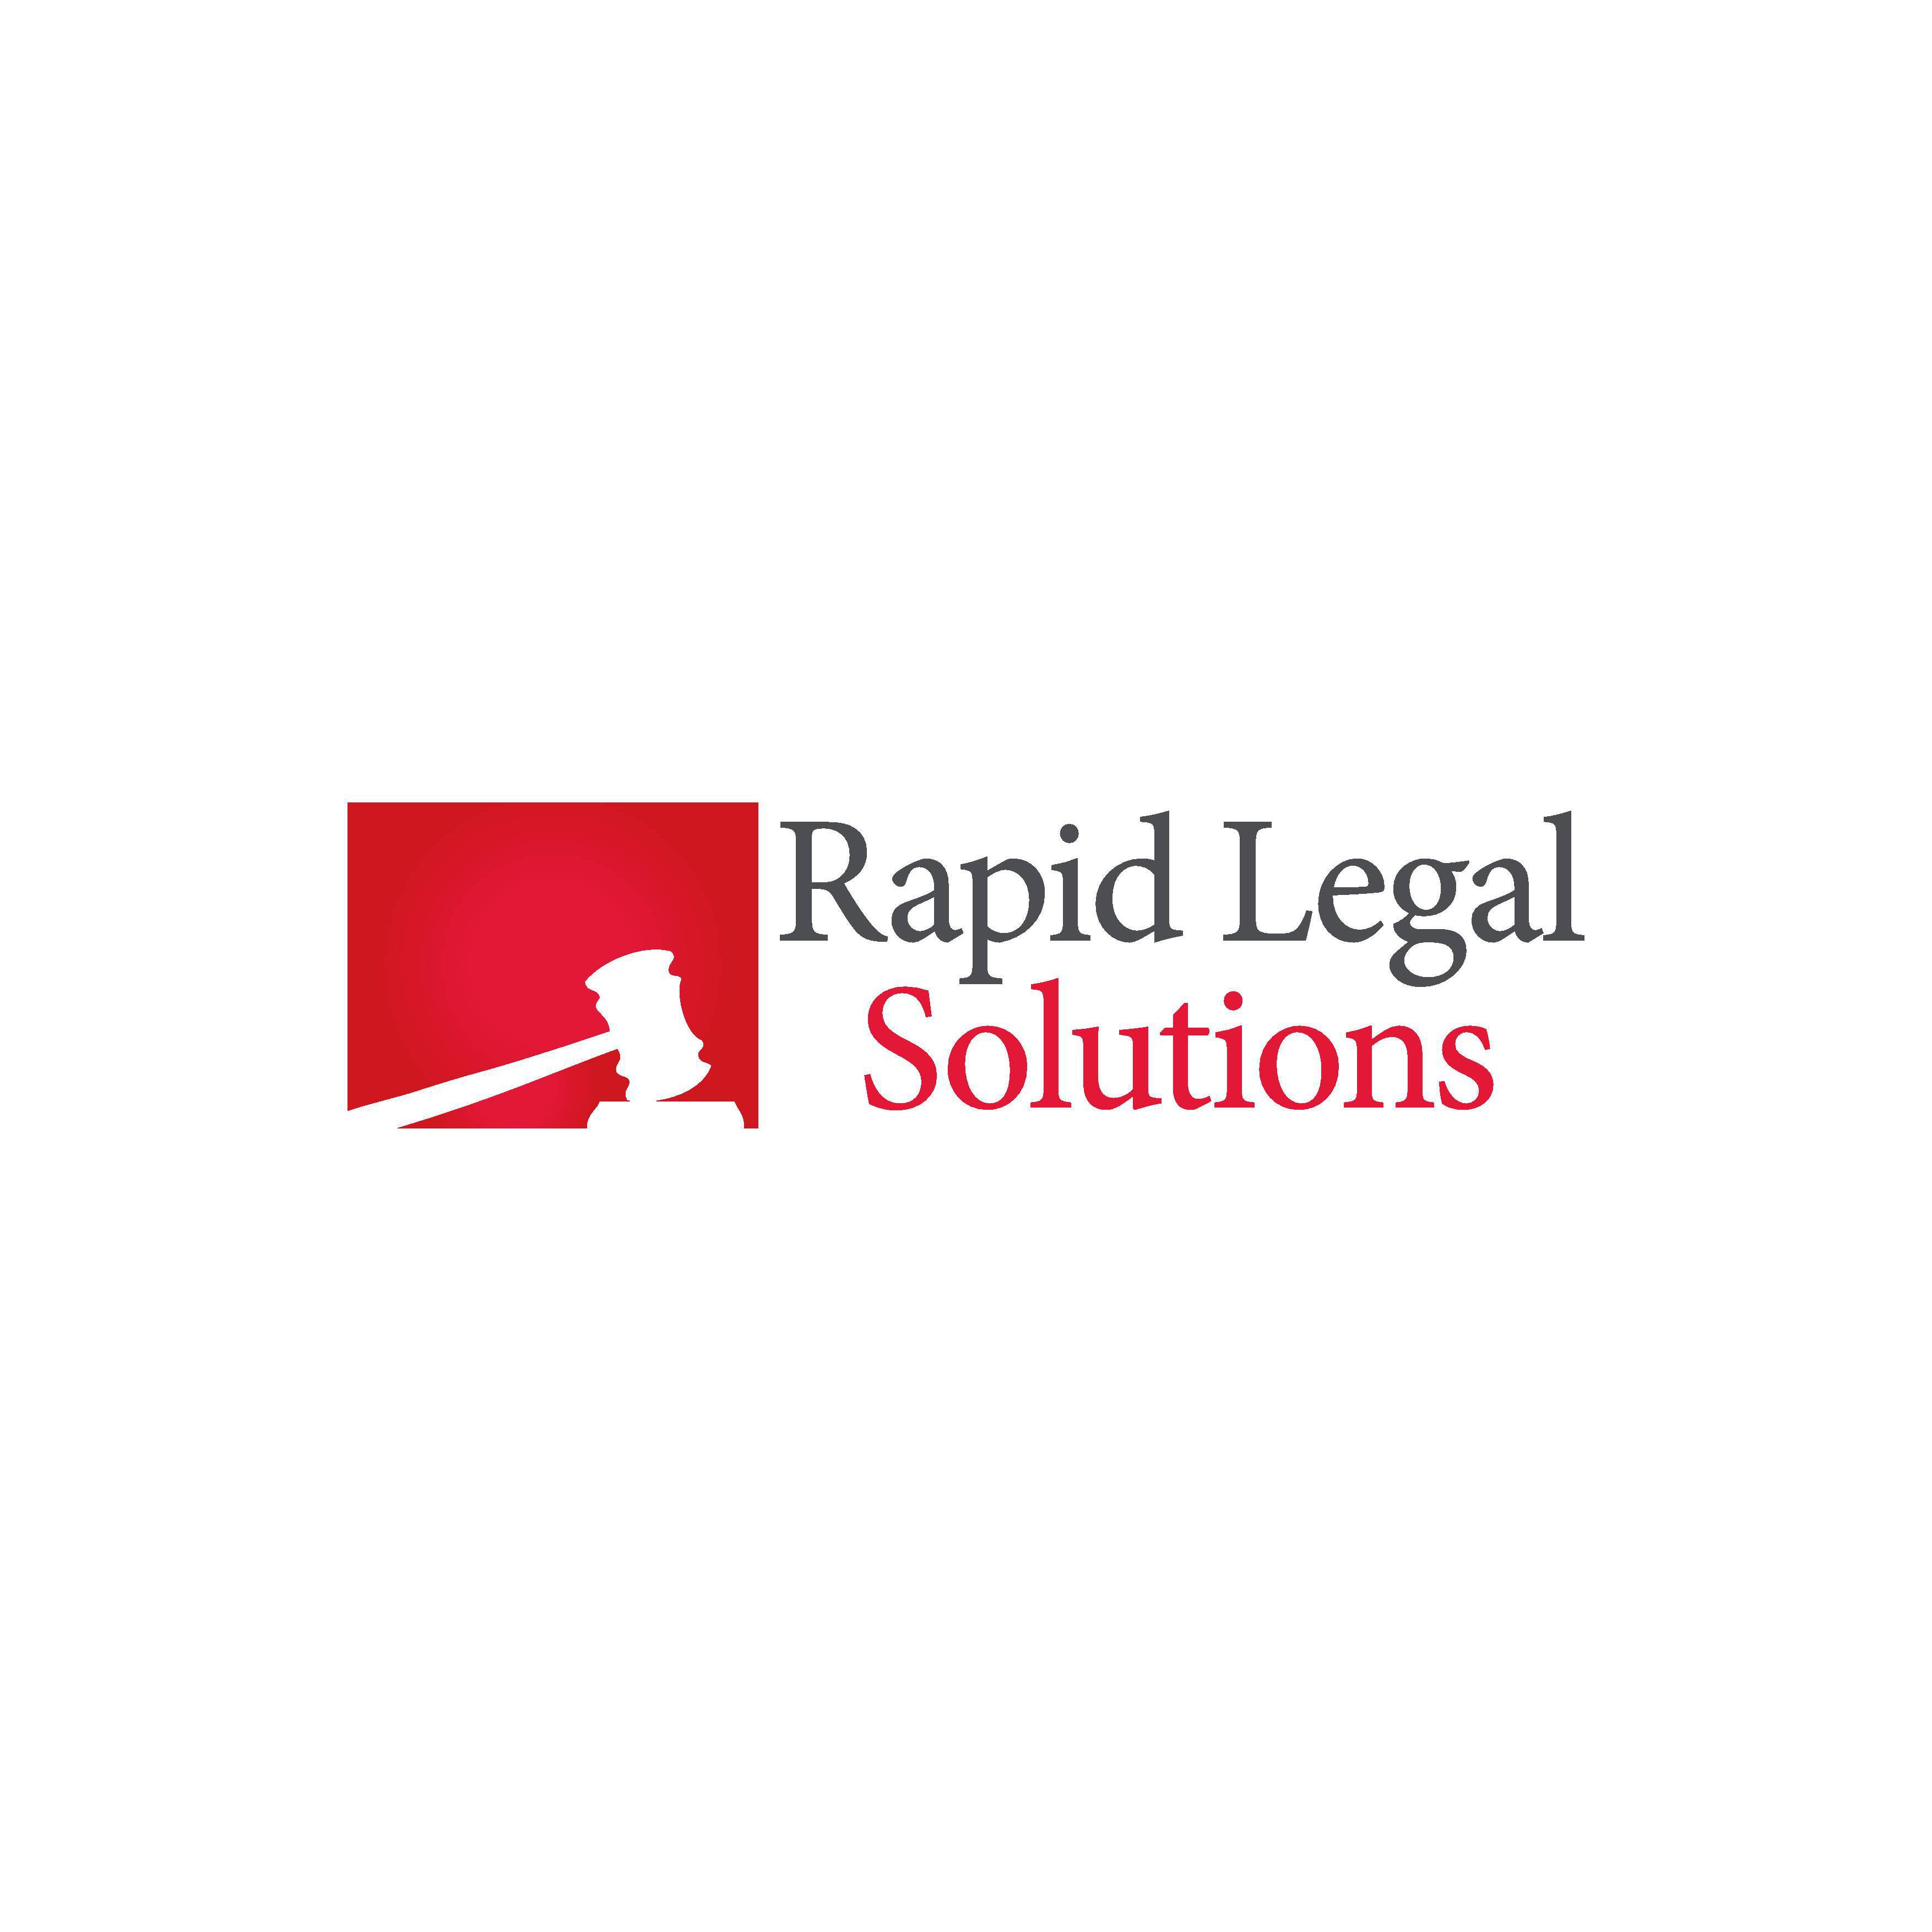 Rapid Legal Solutions - Aitkenvale, QLD 4814 - (07) 4755 9100 | ShowMeLocal.com